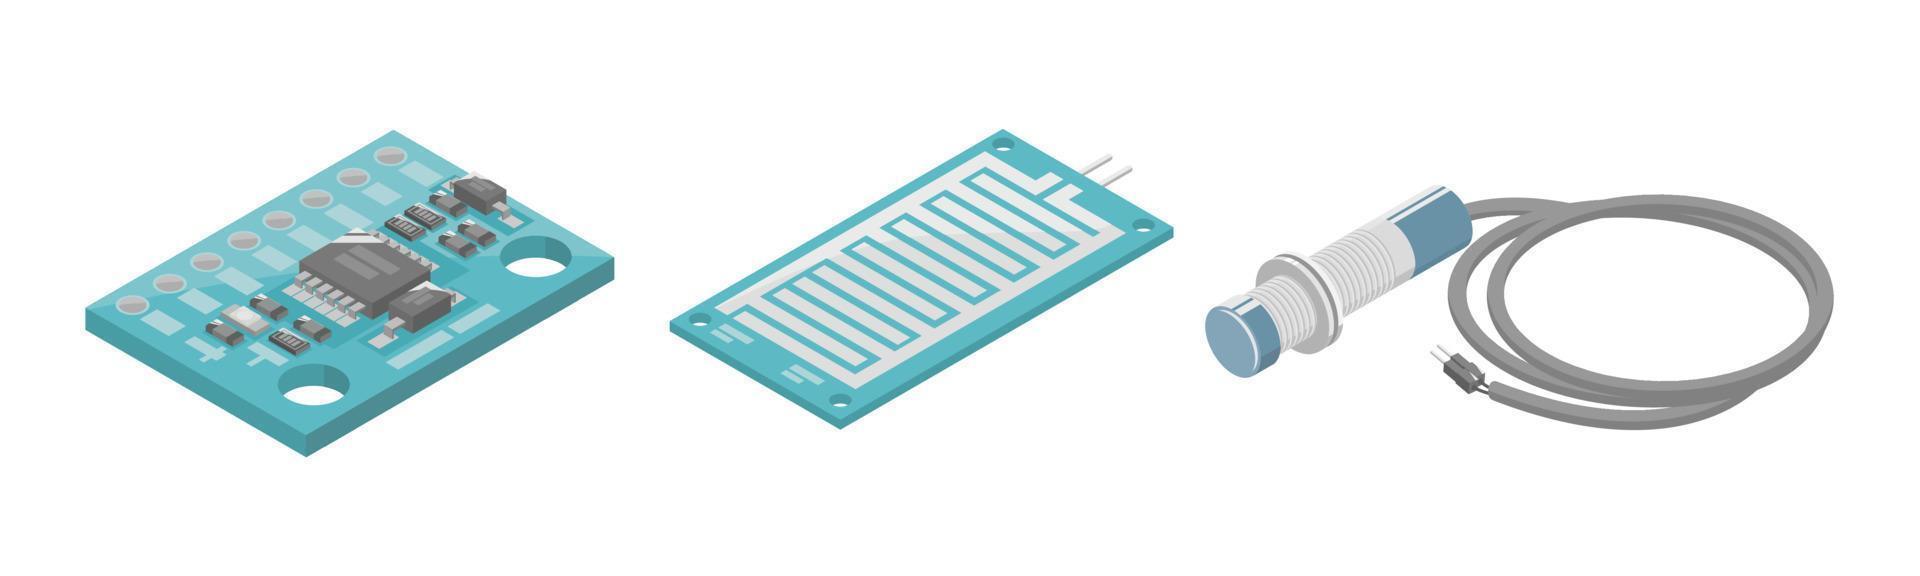 arduino gylo modul sensor mikrocontroller schnittstelle plc industrielle komponente isometrische karikatur vektor